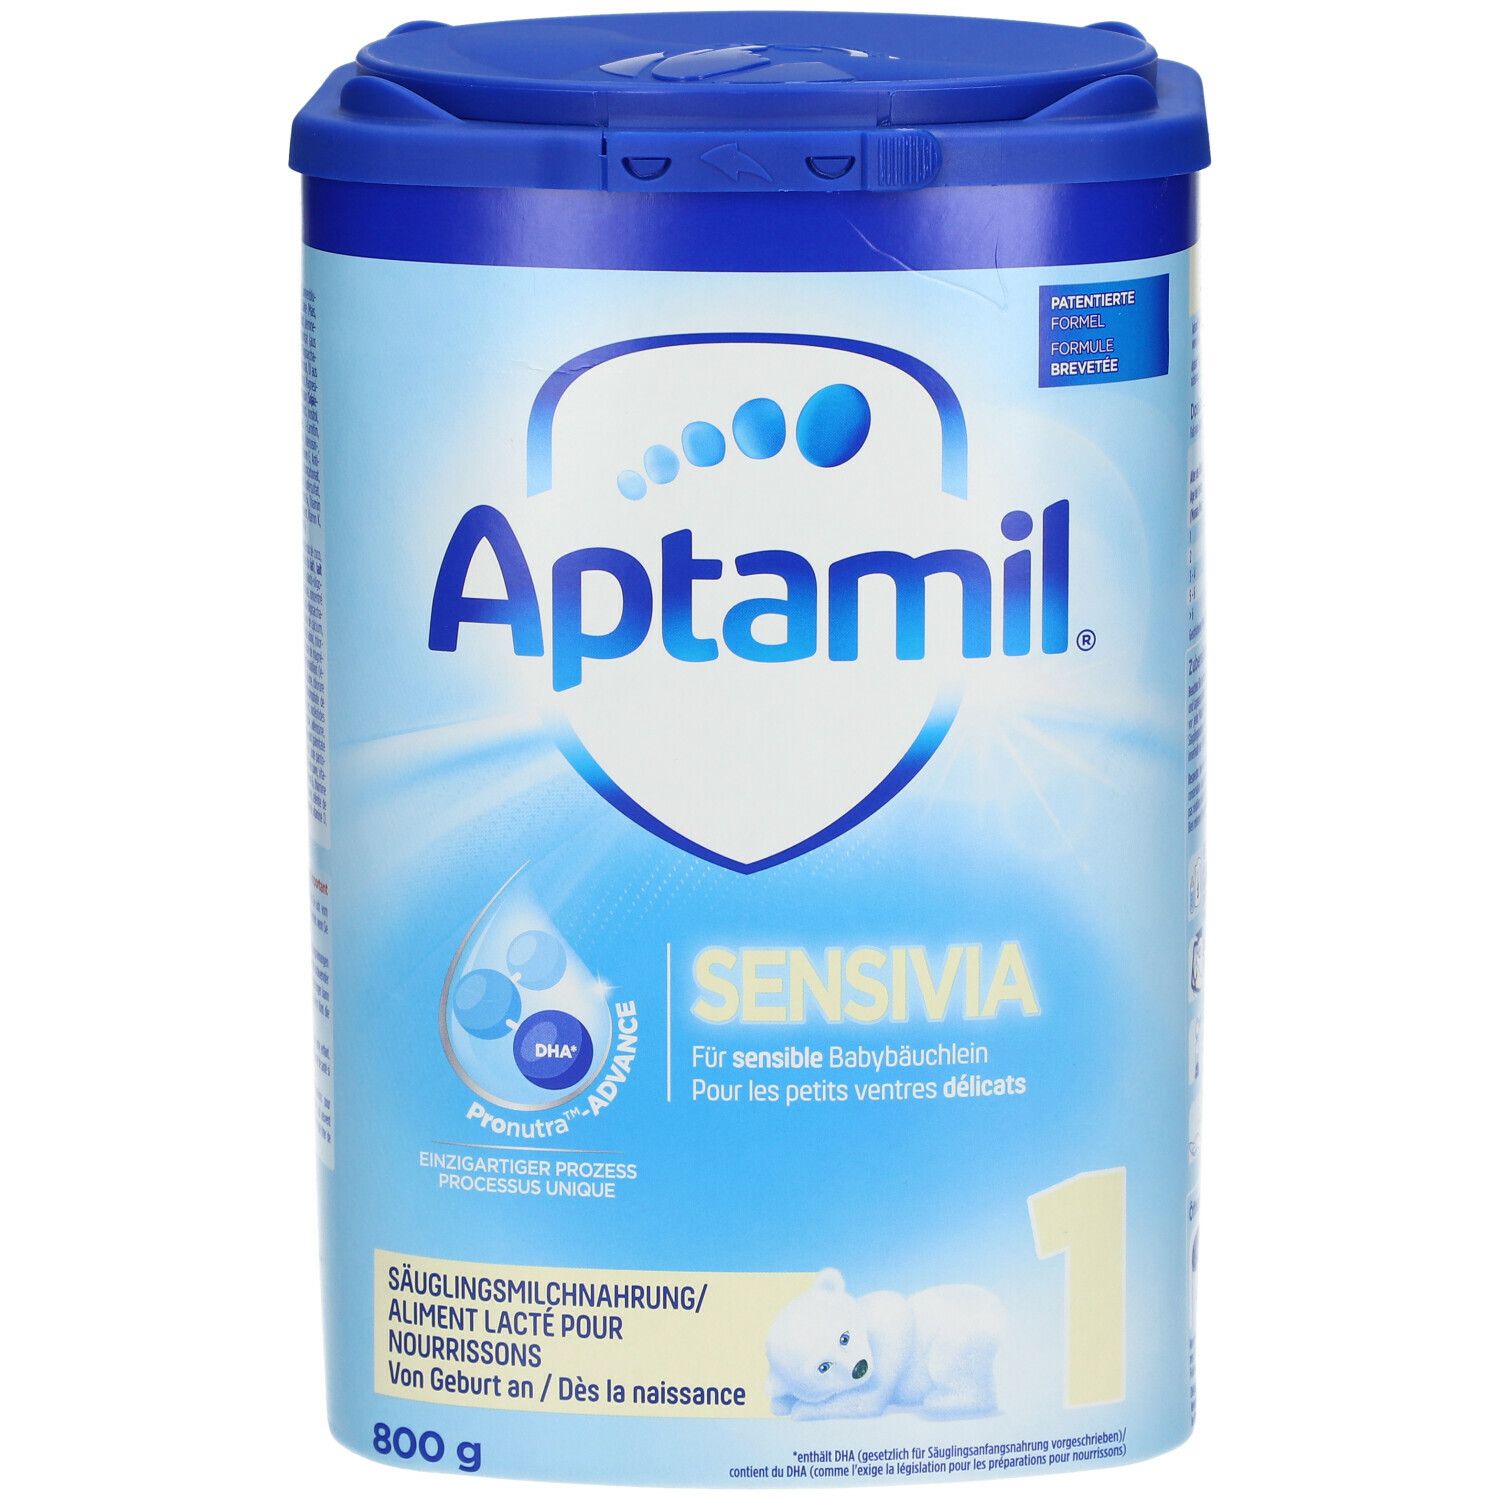 Aptamil® Sensivia 1